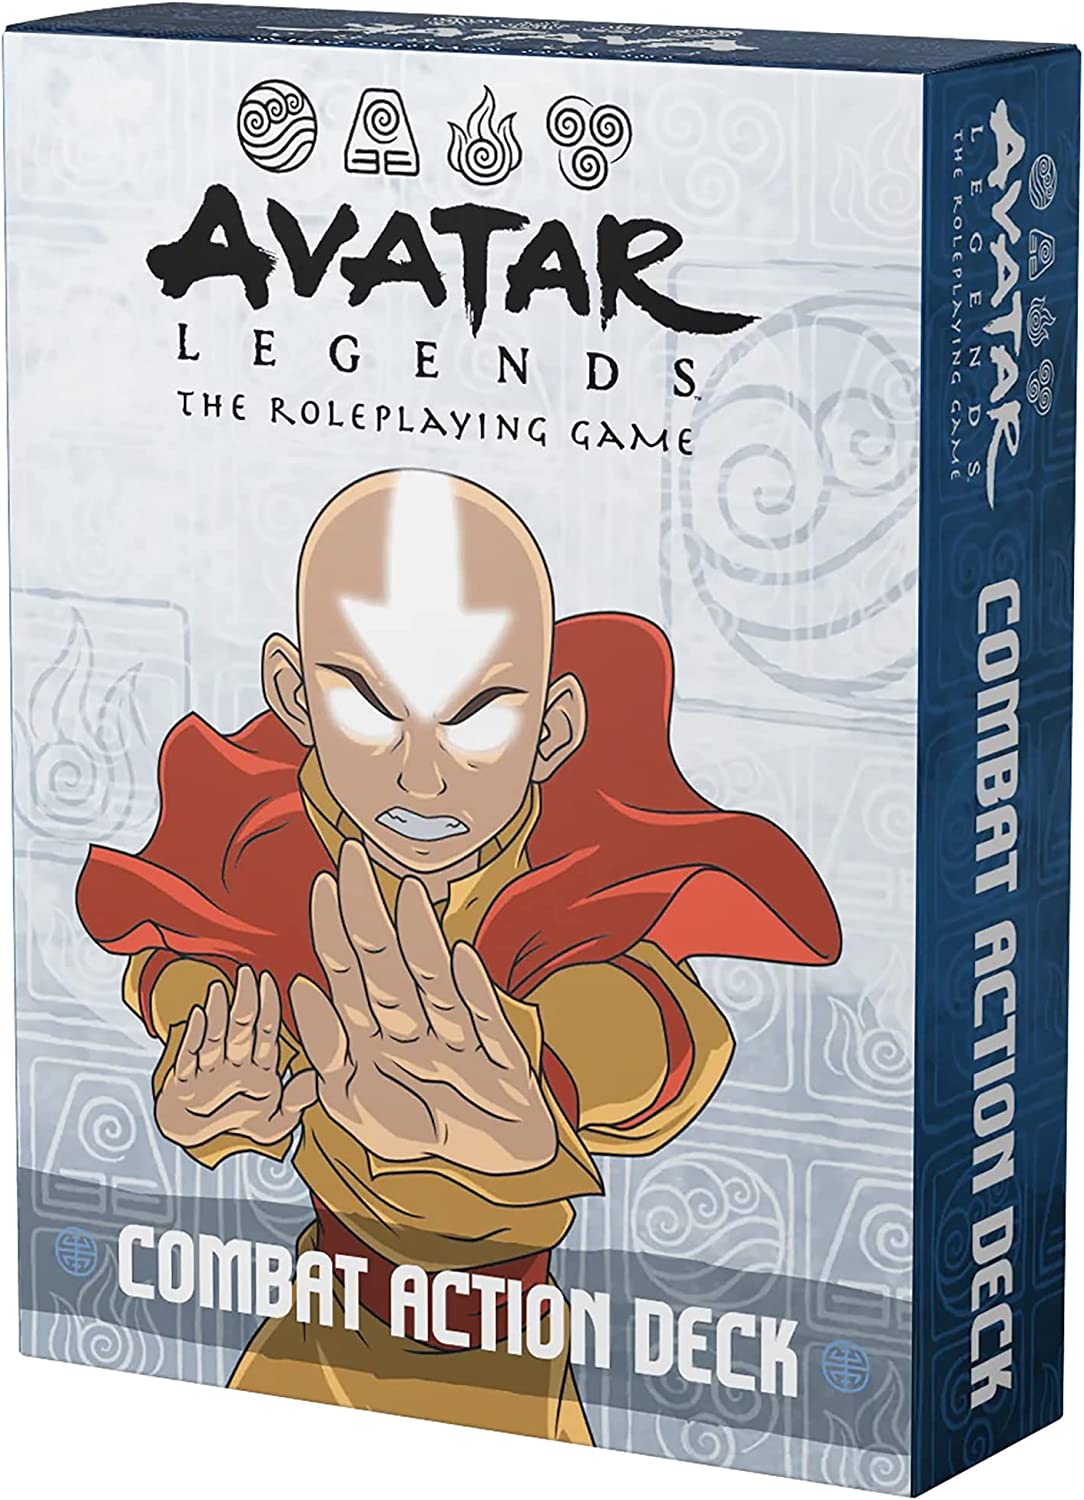 Avatar Legends The RPG: Combat Action Deck Expansion - 55 Card Deck | CCGPrime